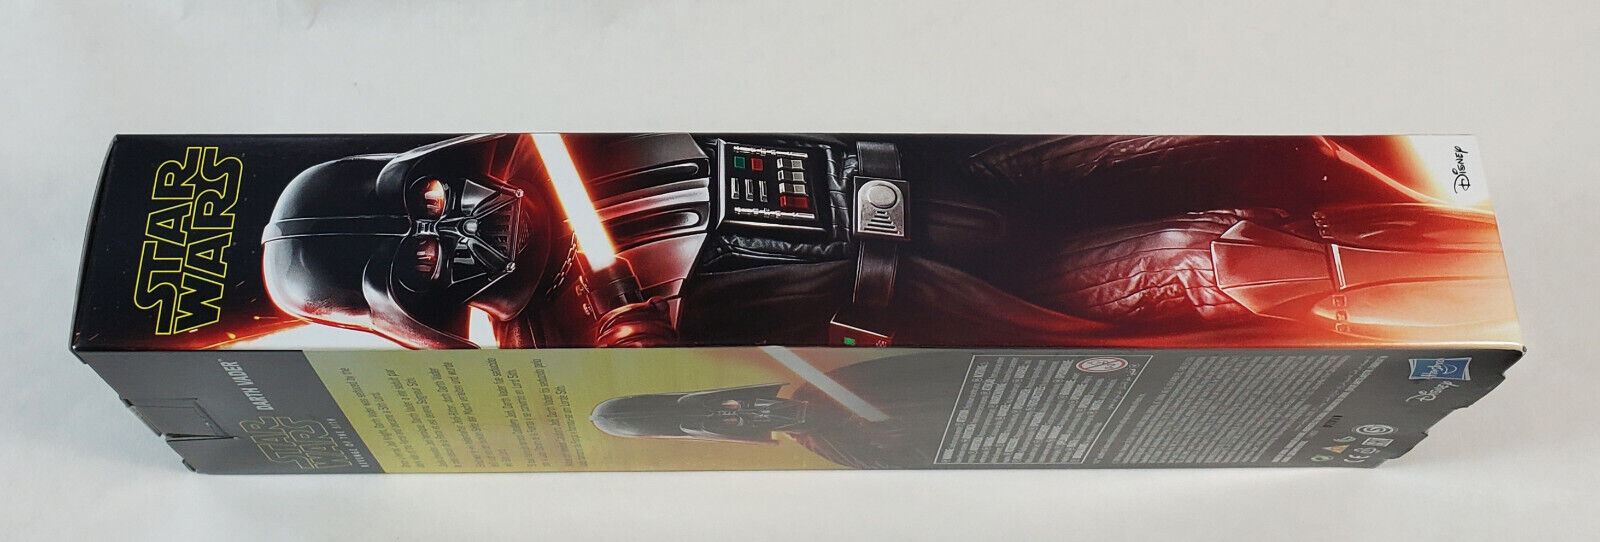 Star Wars Revenge Of The Sith - Darth Vader Hasbro 12-inch Action Figure Toy Hasbro E4049 - фотография #8